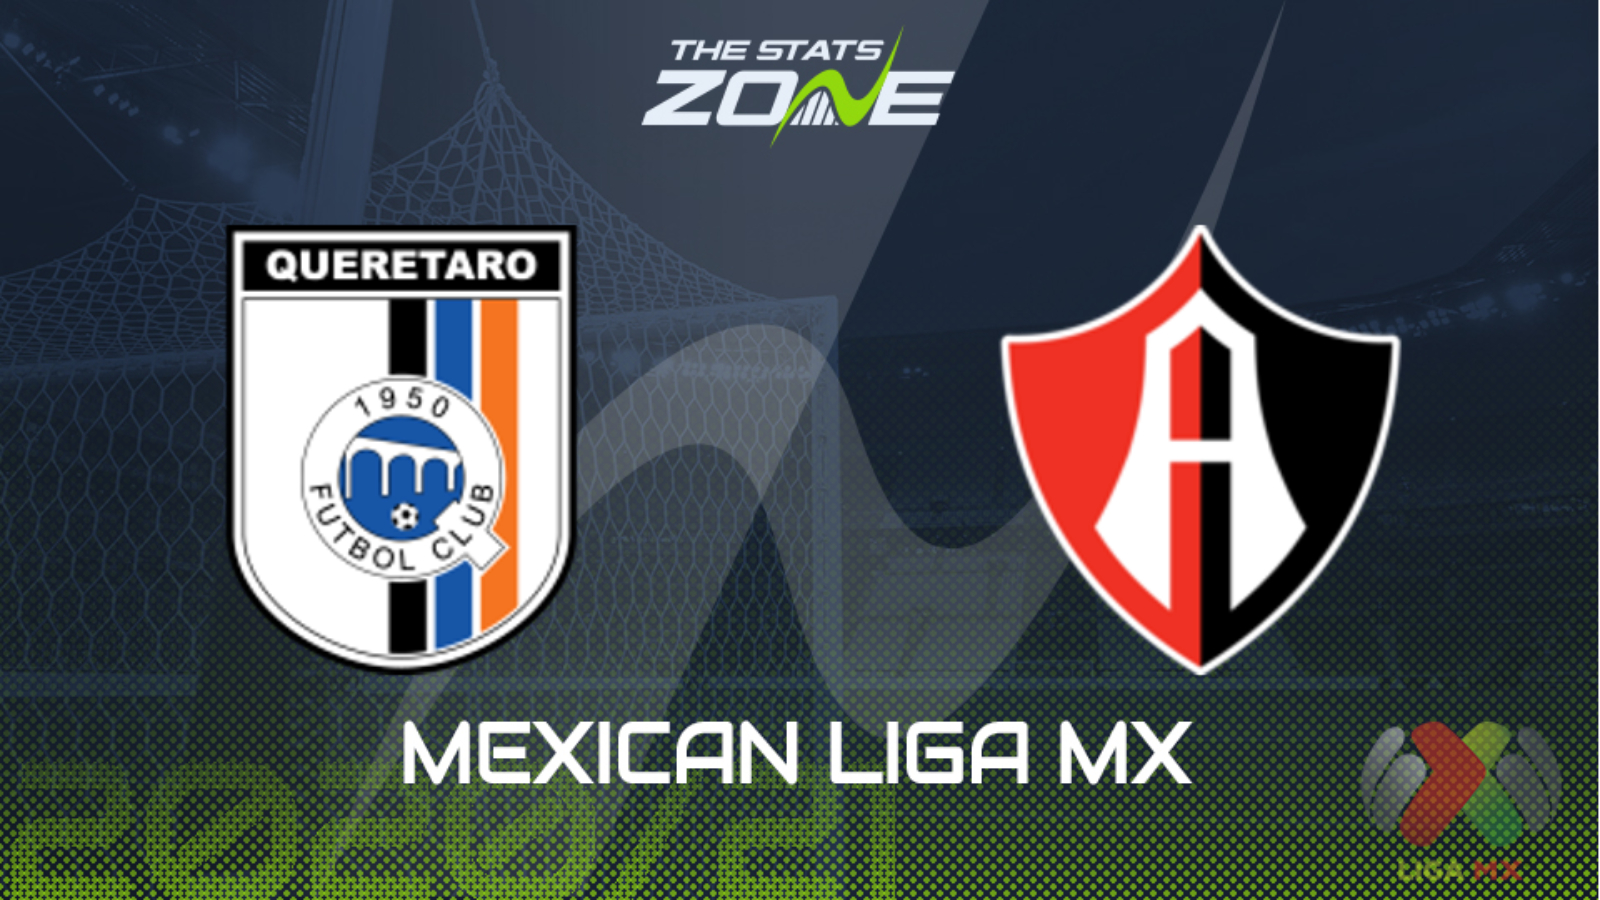 2020 21 Mexican Liga Mx Queretaro Vs Atlas Preview Prediction The Stats Zone